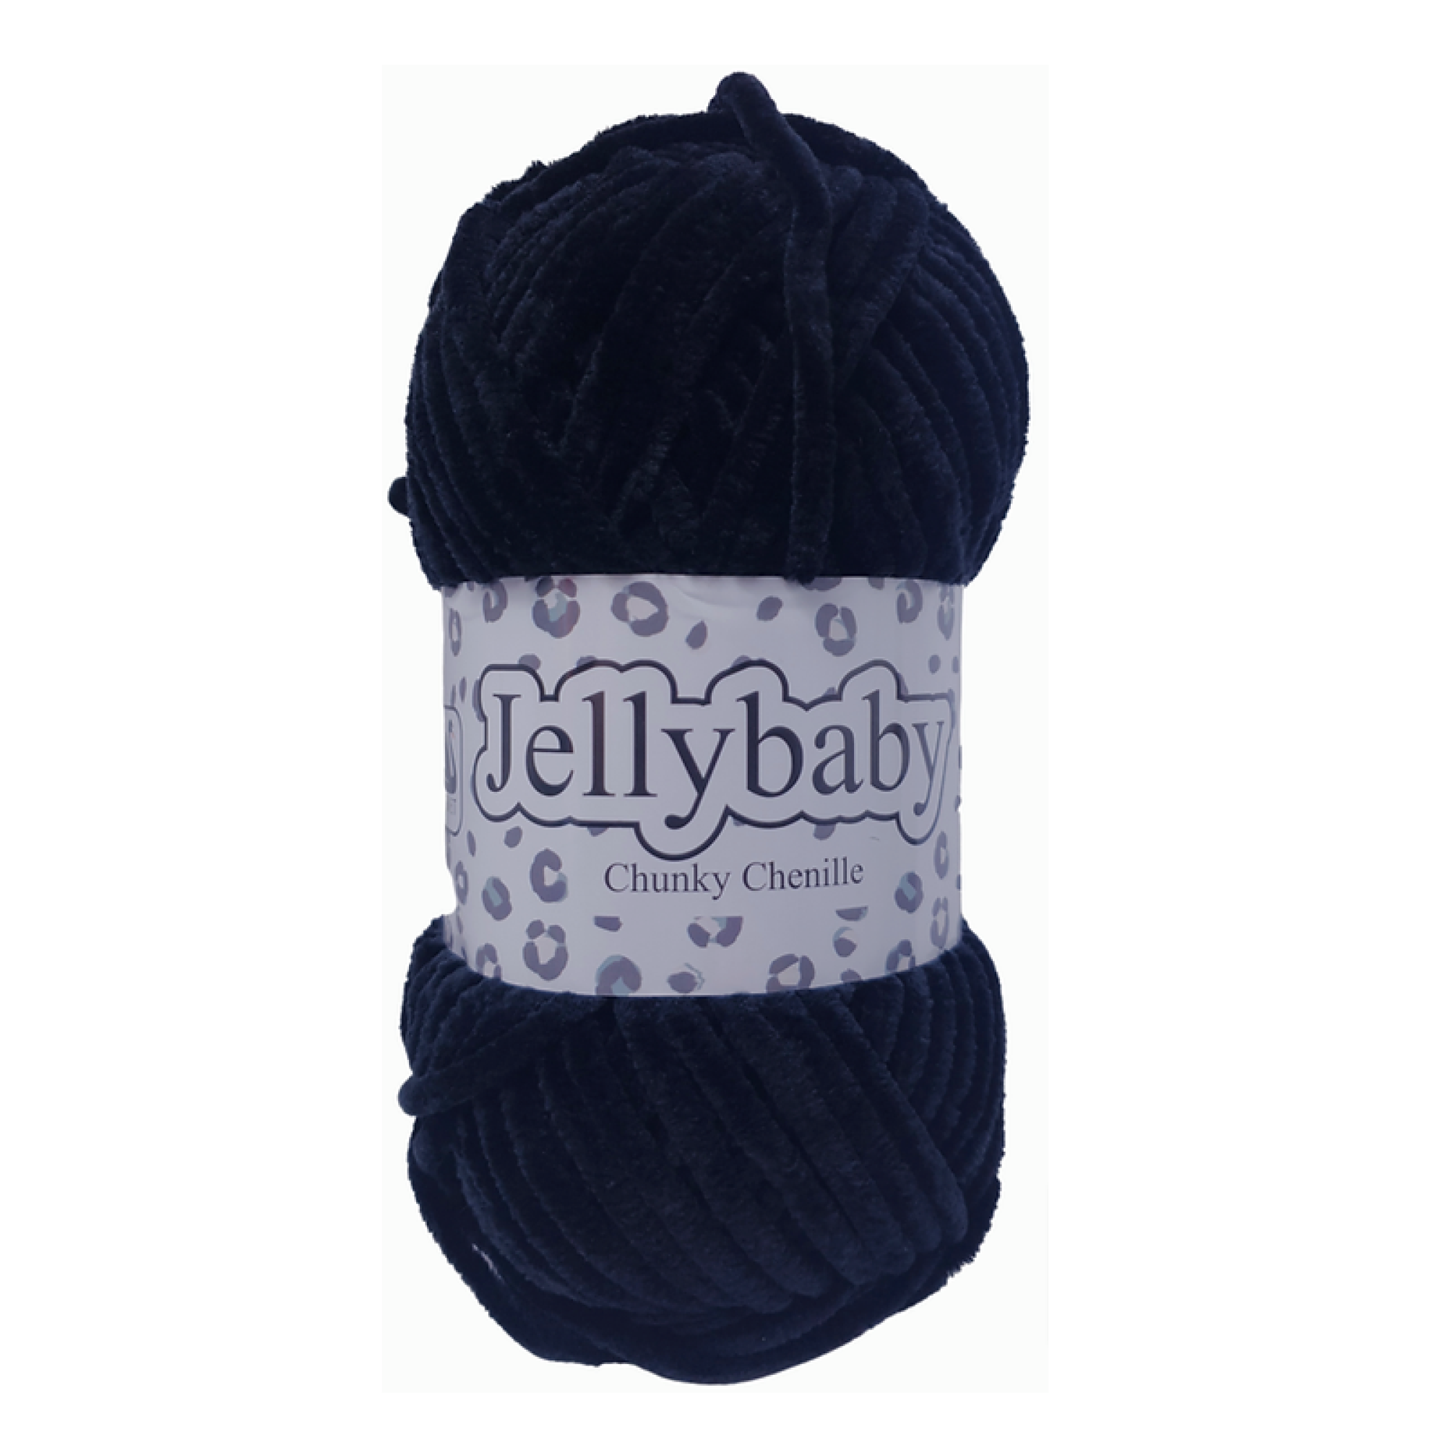 Cygnet Yarns - Jellybaby Chenille - Chunky - 100g Ball - 005 Black